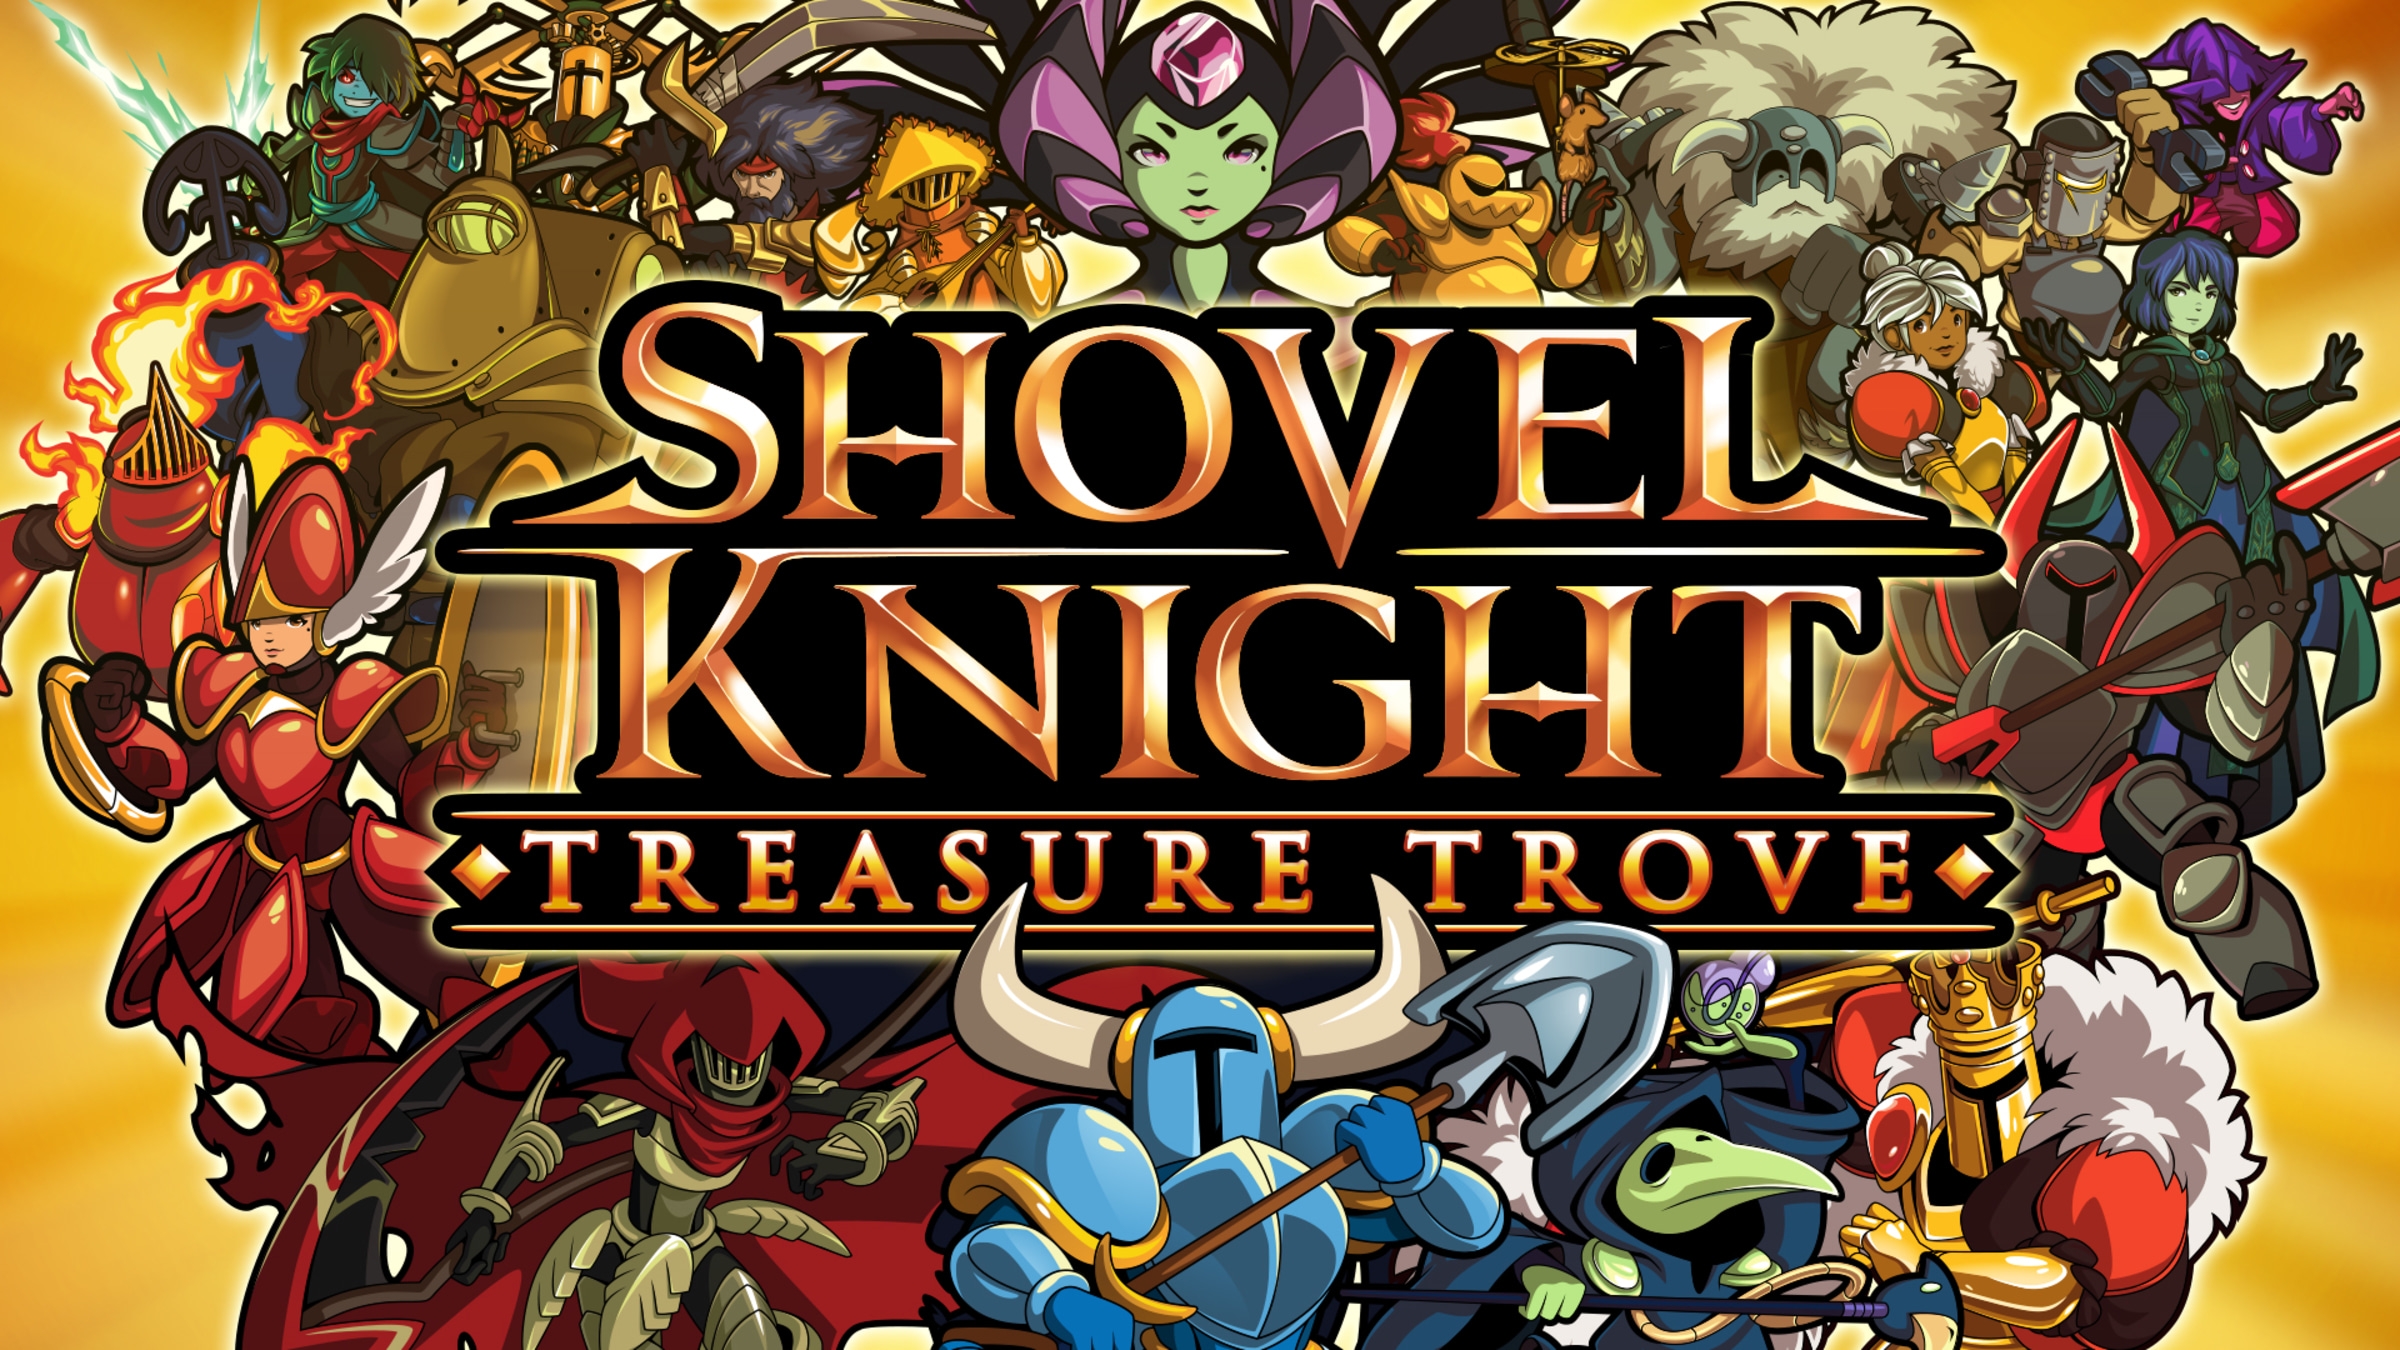 shovel knight treasure trove free